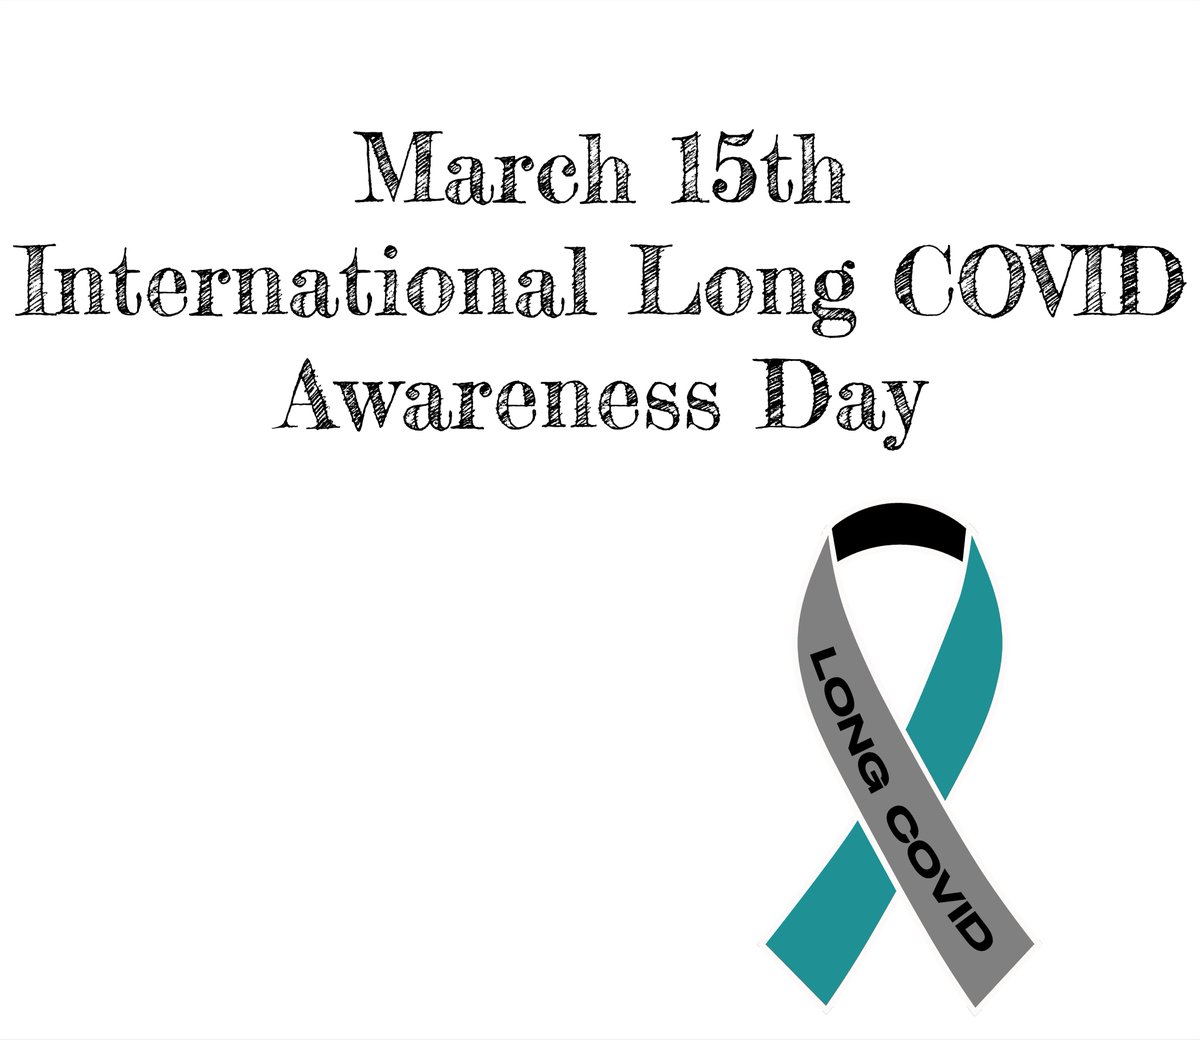 March 15 Long Covid Awareness Day.
#TreatLongCovid #ResearchLongCovid #NotRecovered
#LongCovidAwareness